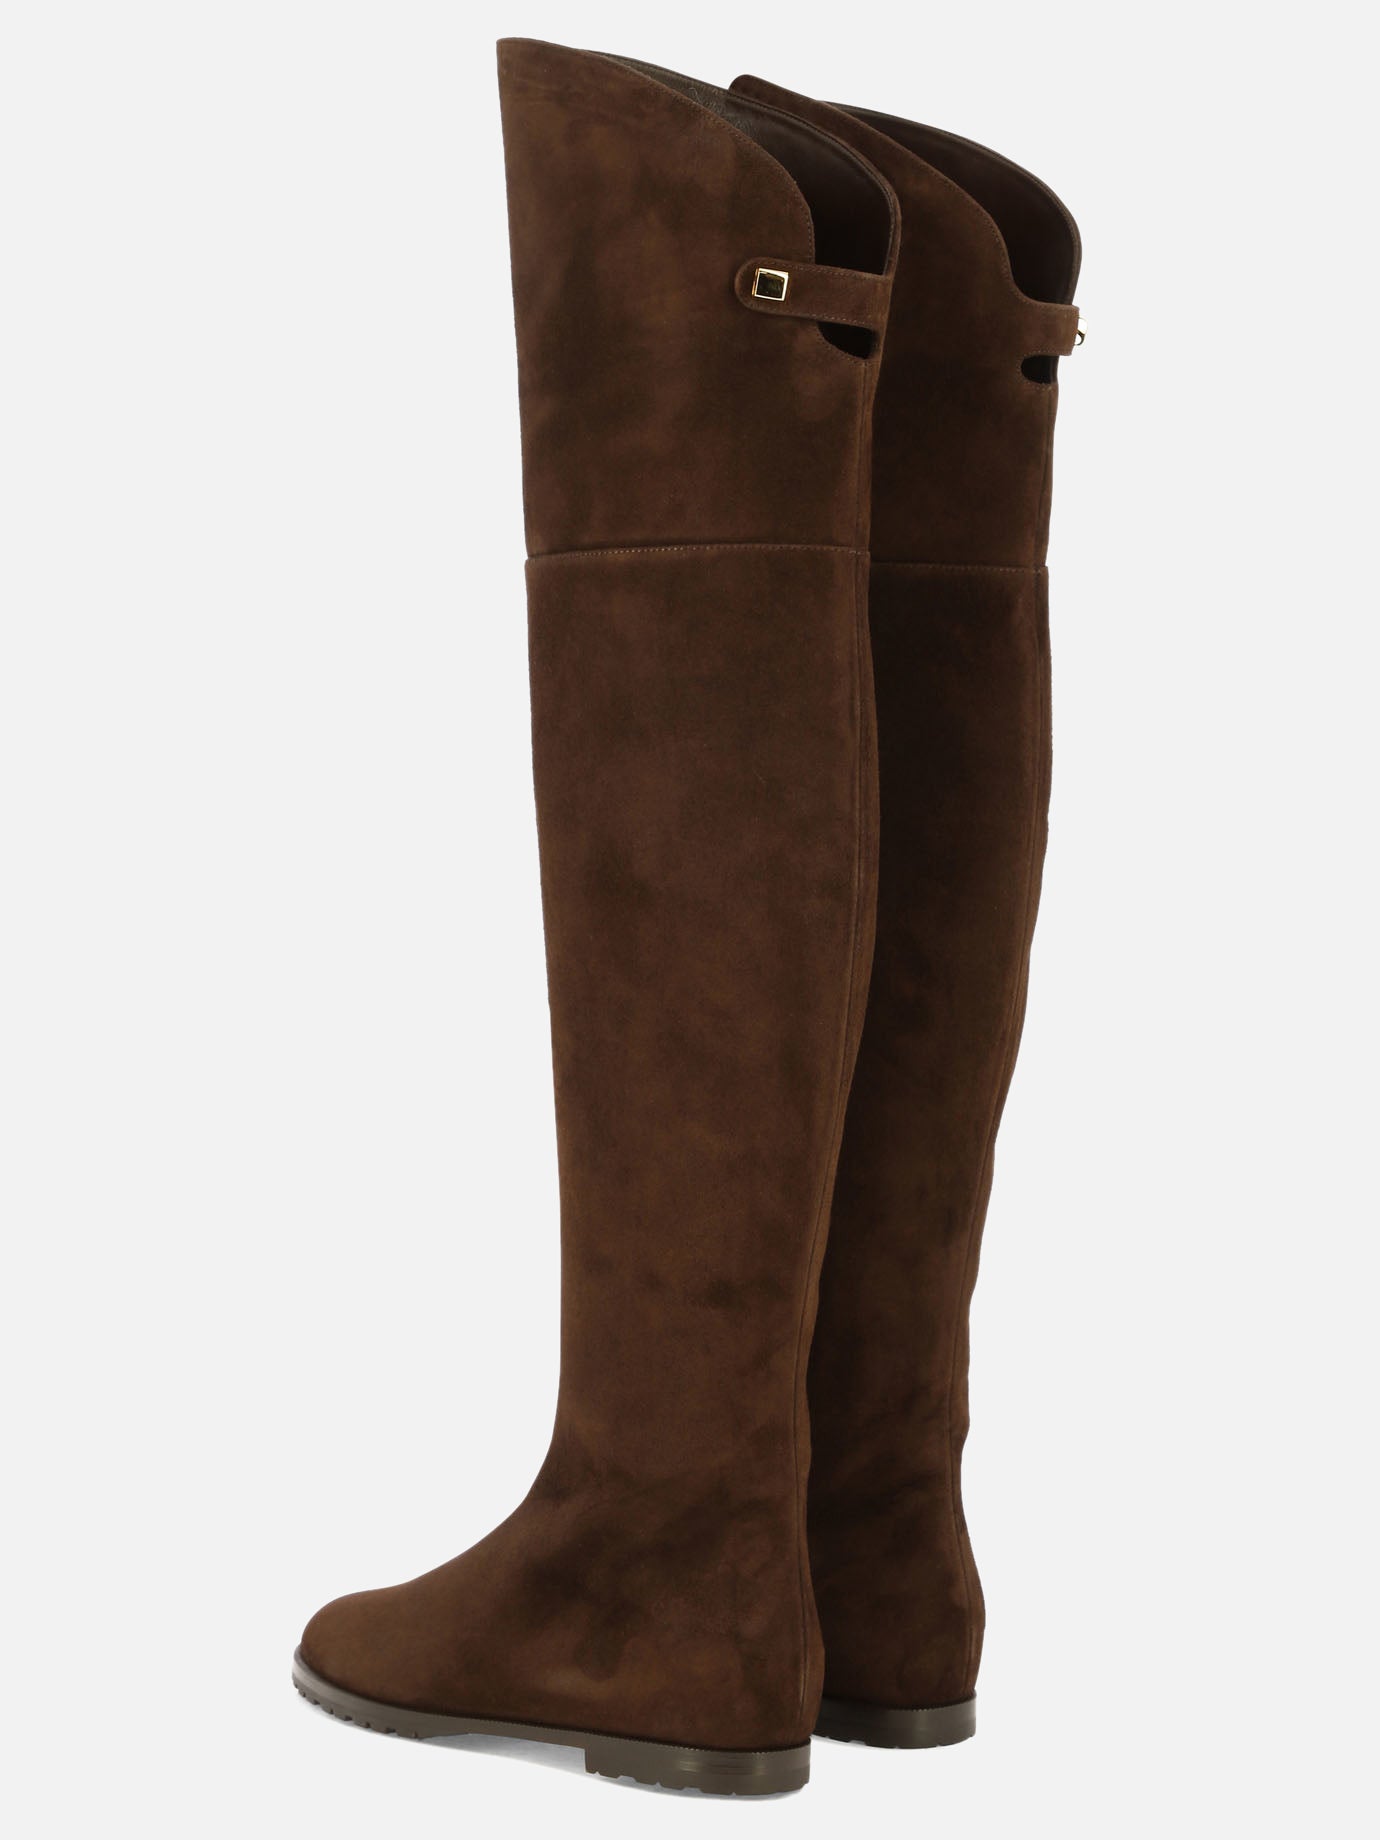 "Stefania" boots